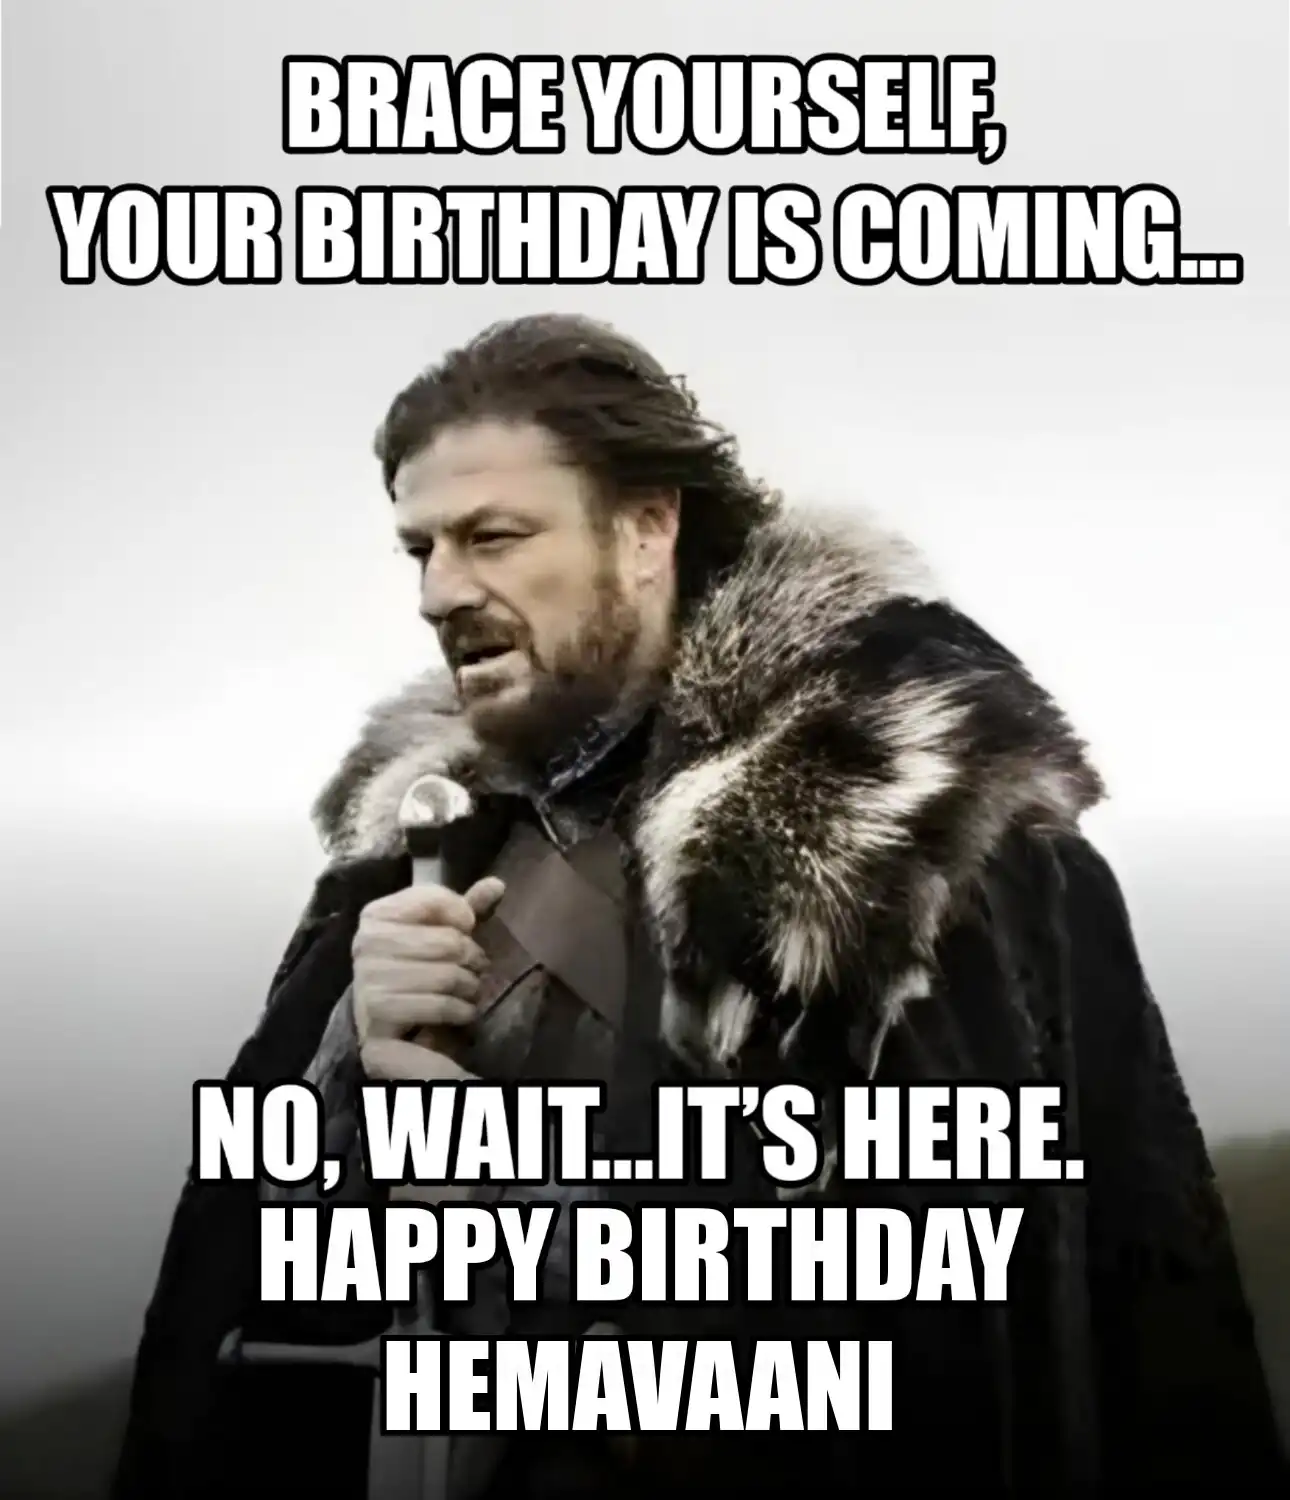 Happy Birthday Hemavaani Brace Yourself Your Birthday Is Coming Meme